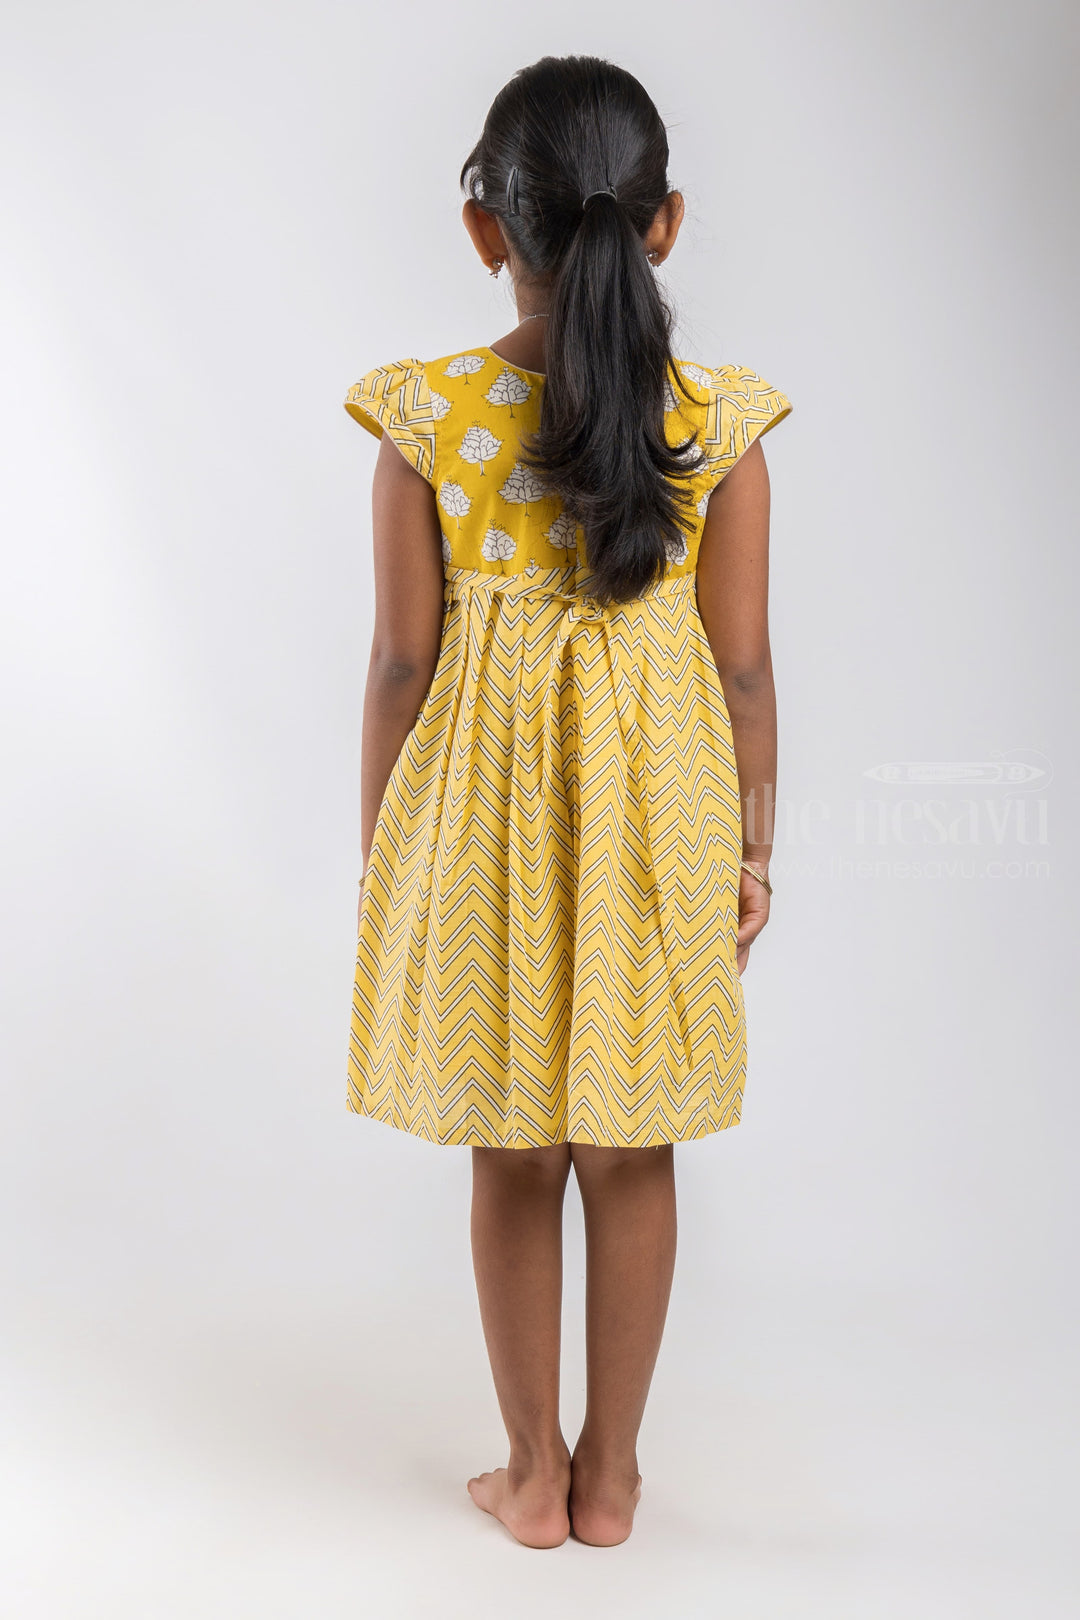 The Nesavu Girls Cotton Frock Greenish Yellow Printed Cotton Gown For Baby Girls psr silks Nesavu